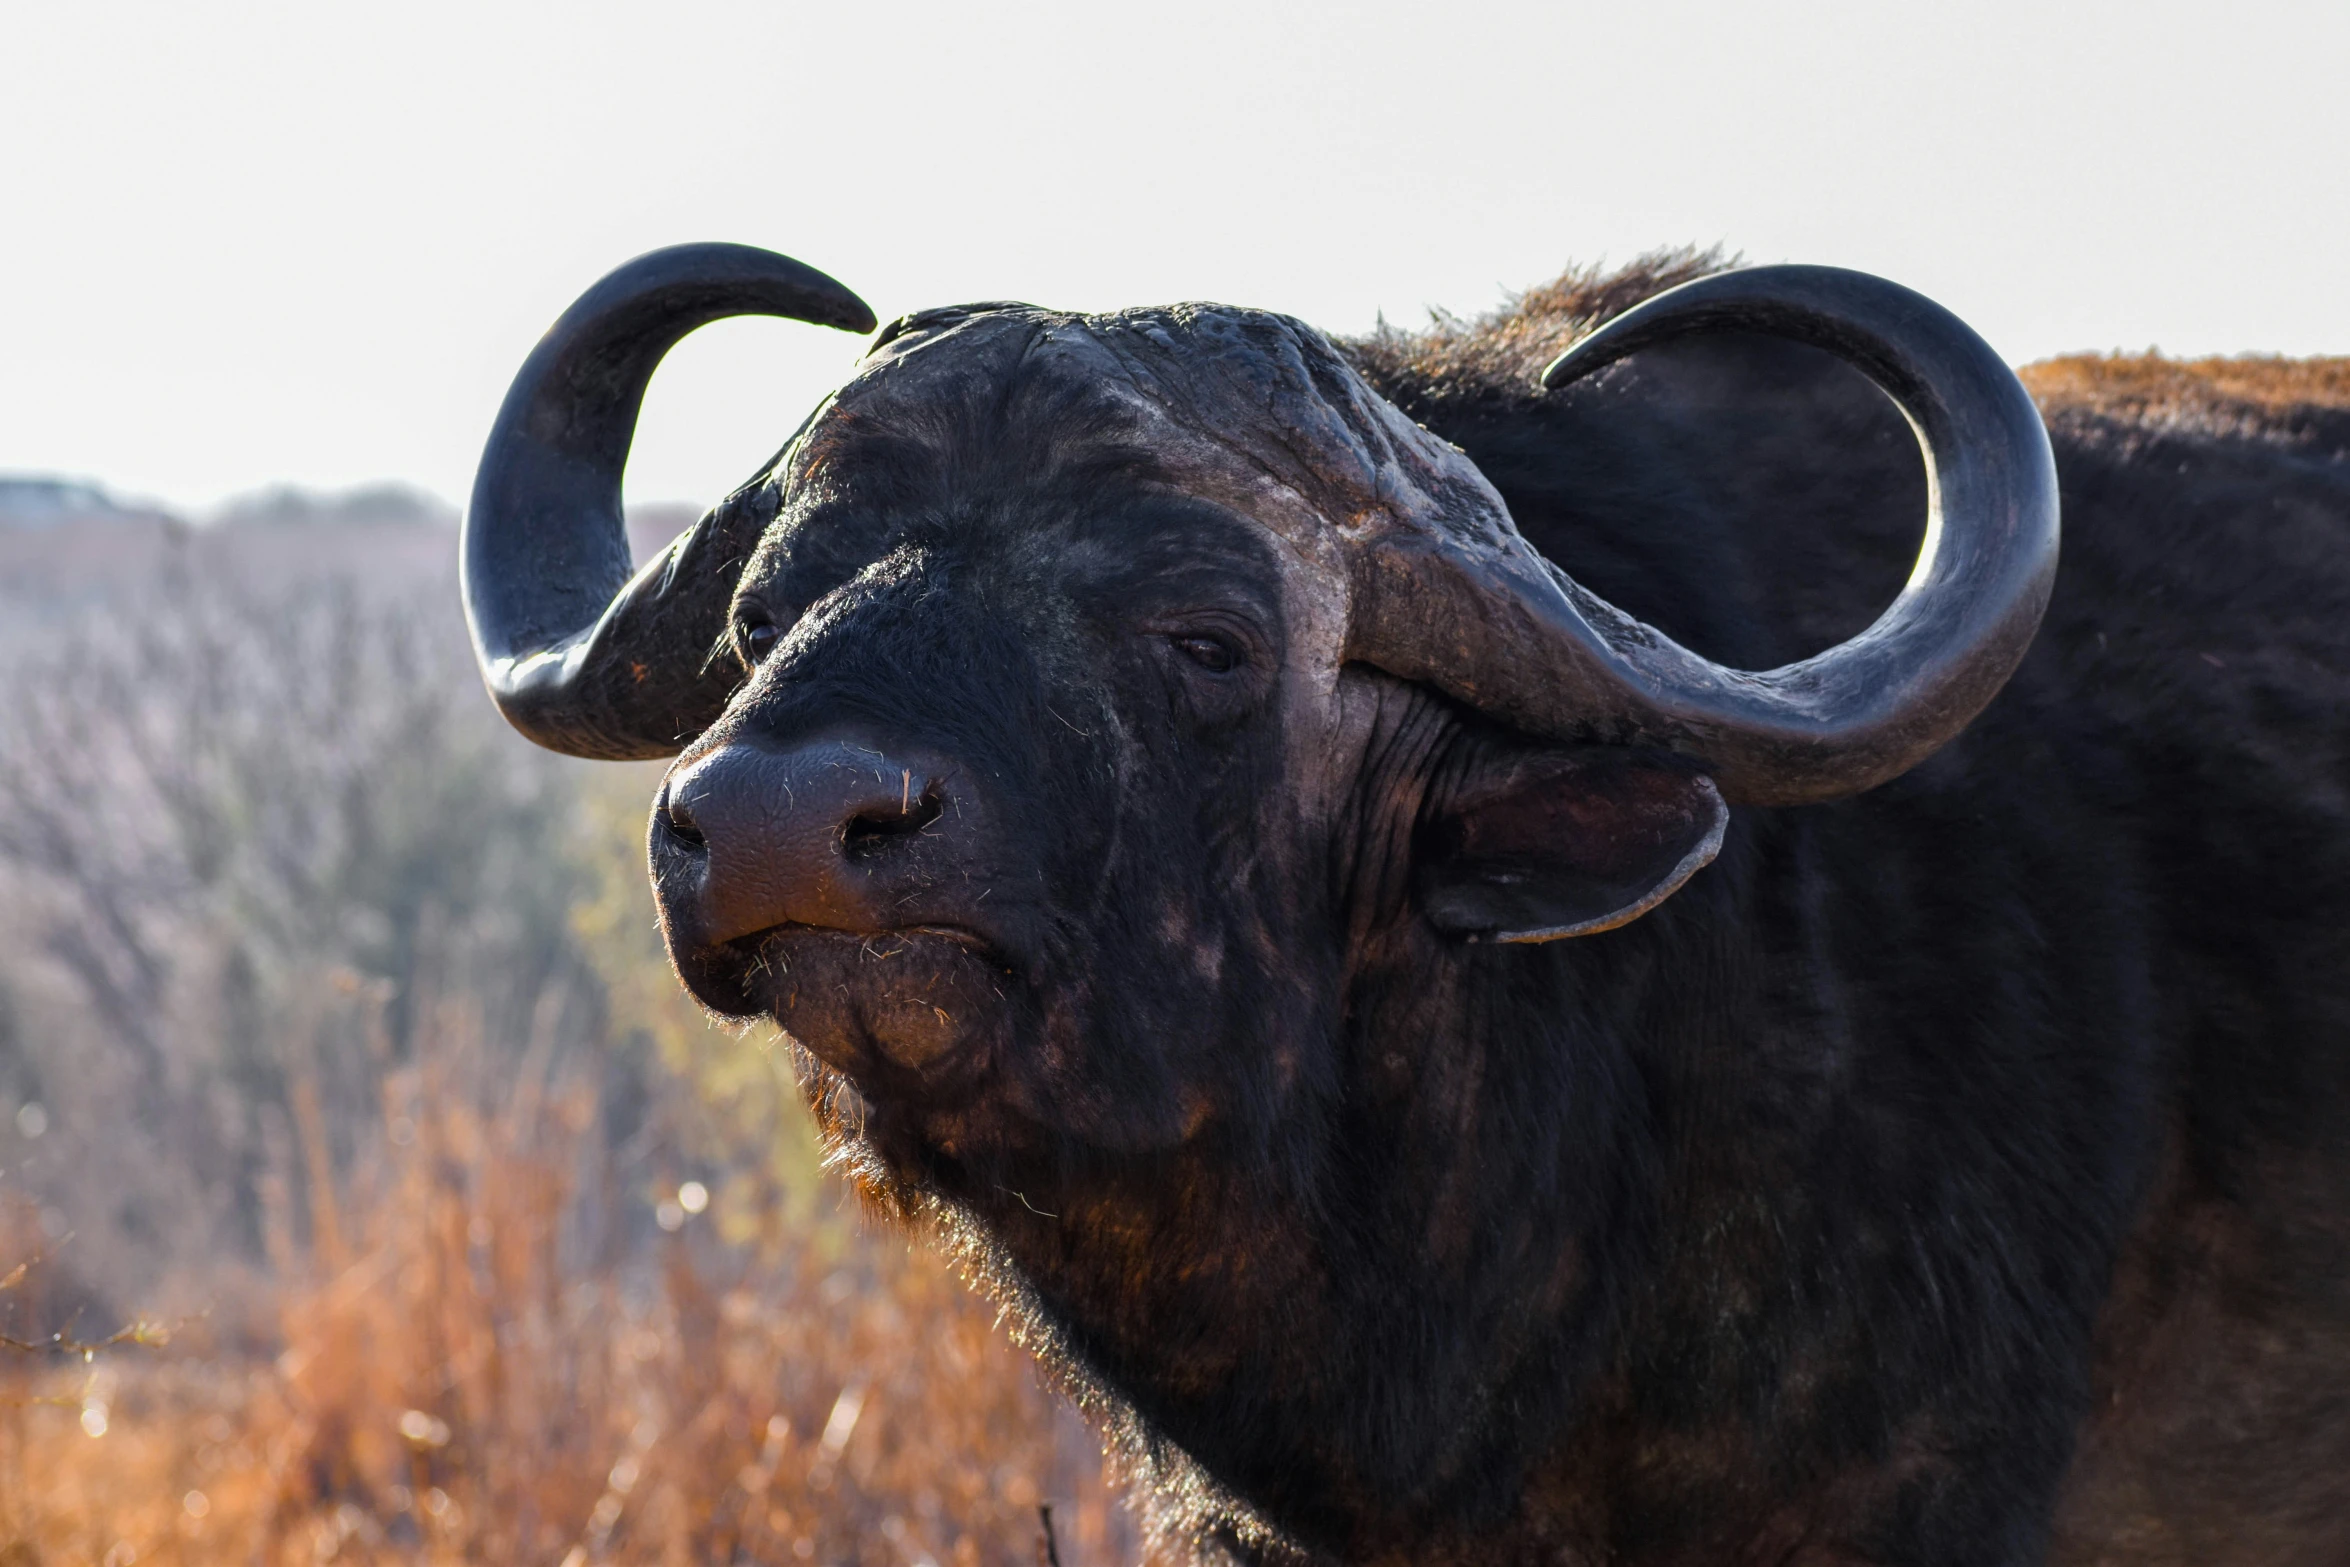 a long horn bull standing on top of a dry grass field